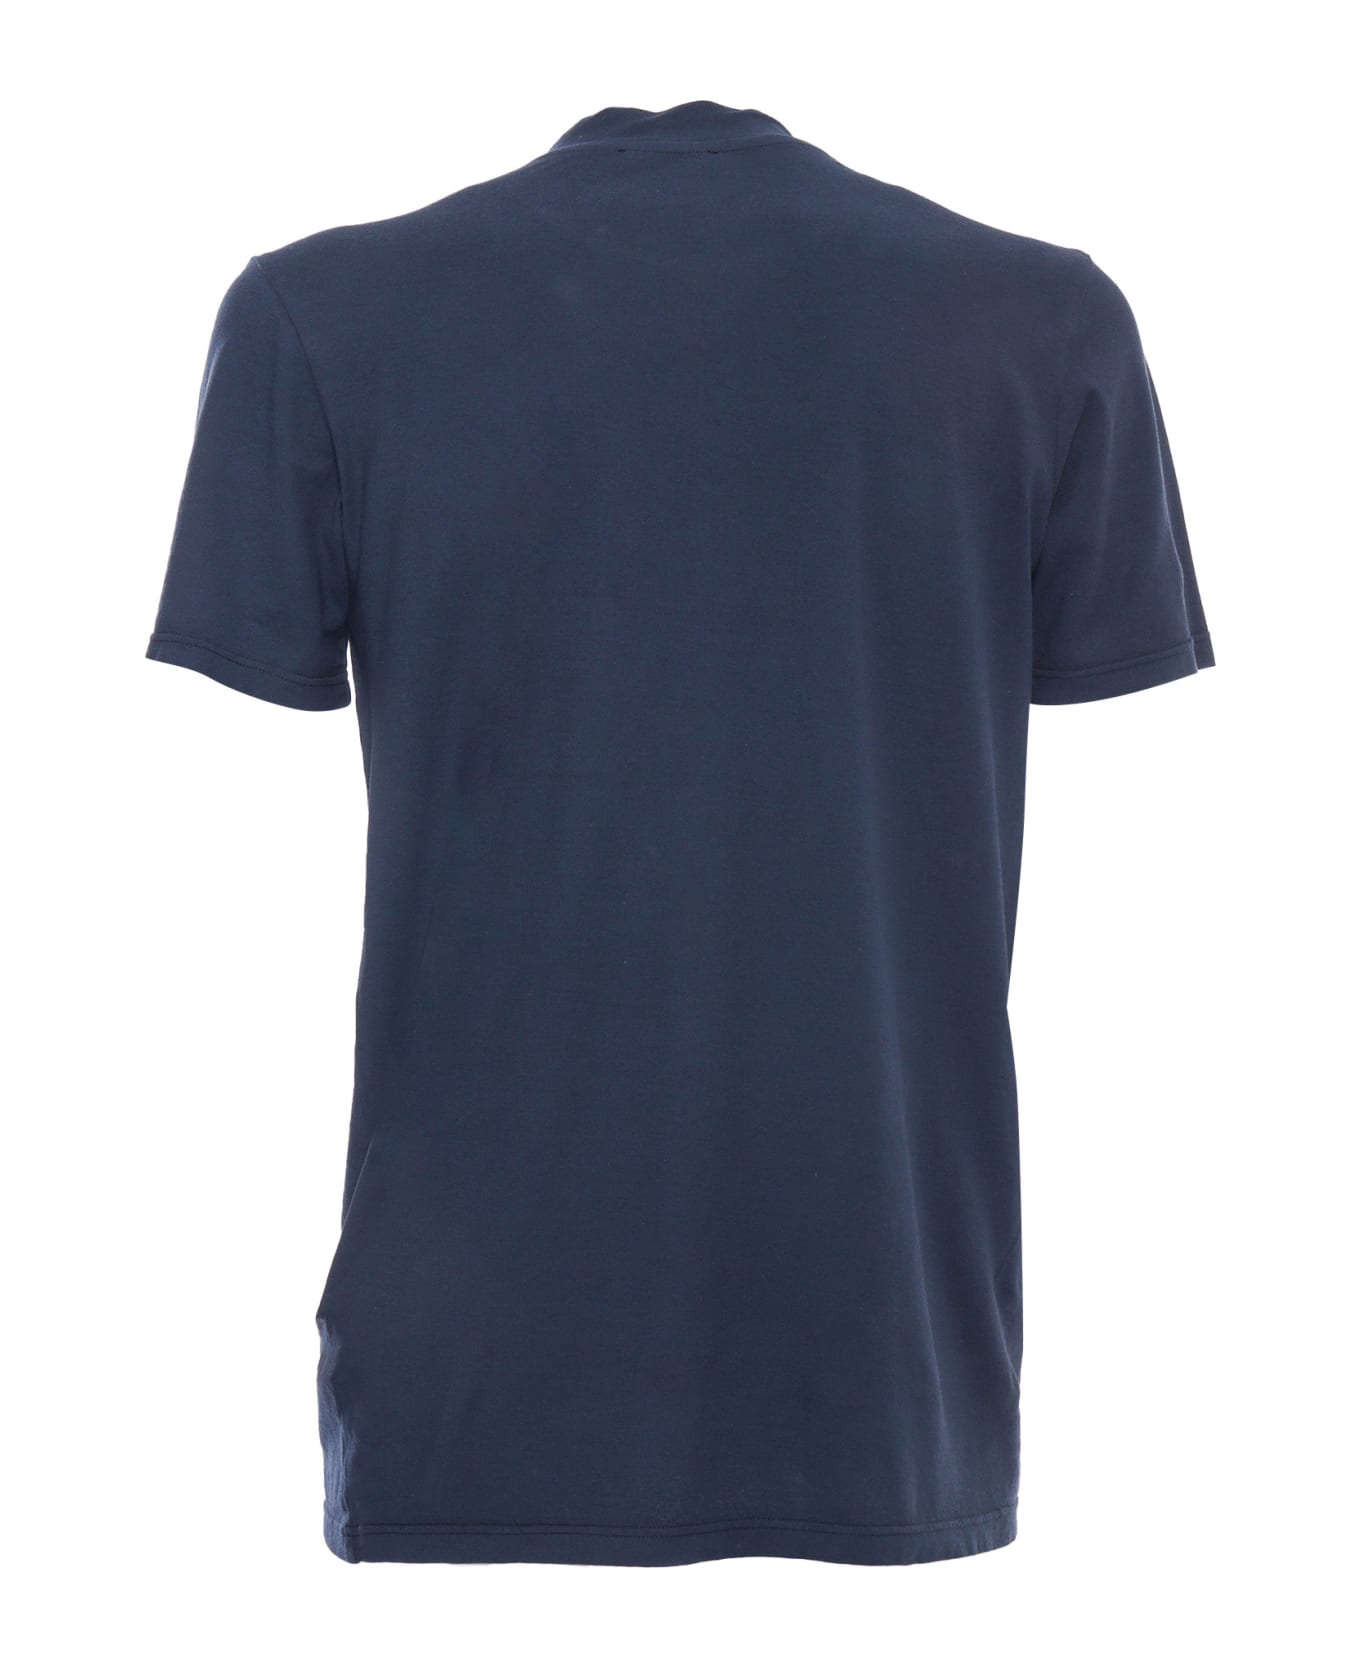 Ballantyne Blue T-shirt - BLUE シャツ